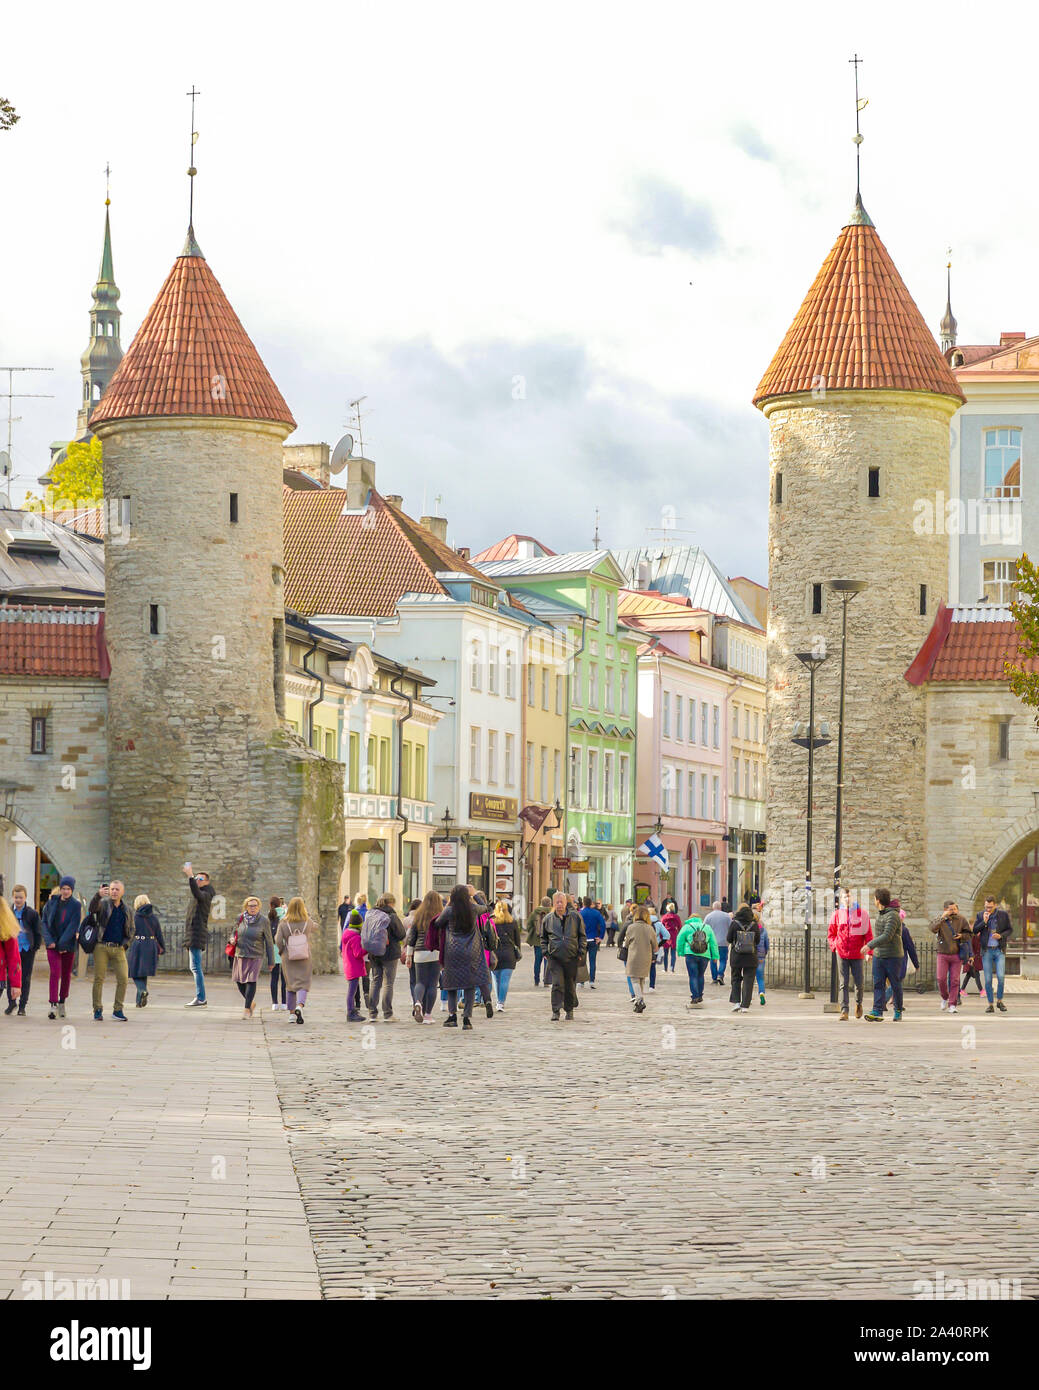 Viru Gate tower in the old town of Tallinn, Estonia Stock Photo